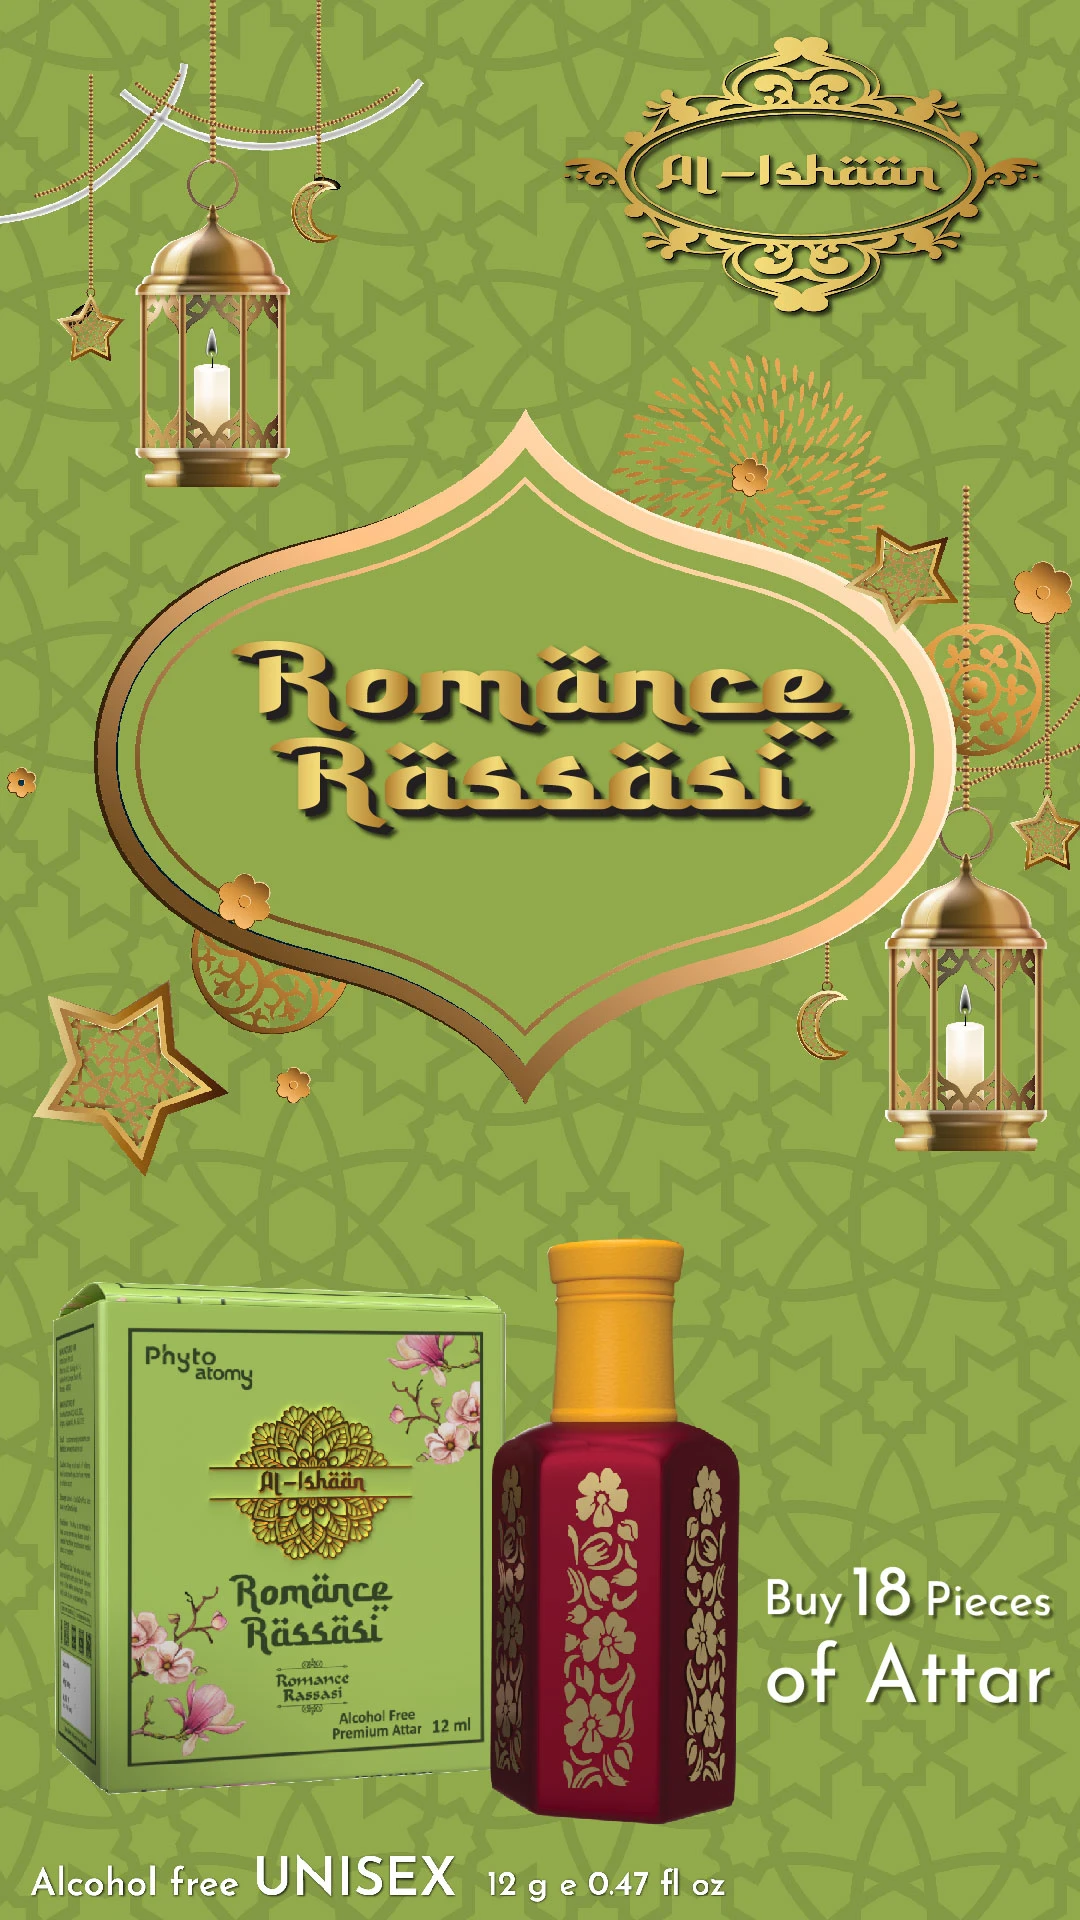 RBV B2B Al Ishan Romance Rassasi Attar (12ml)-18 Pcs.